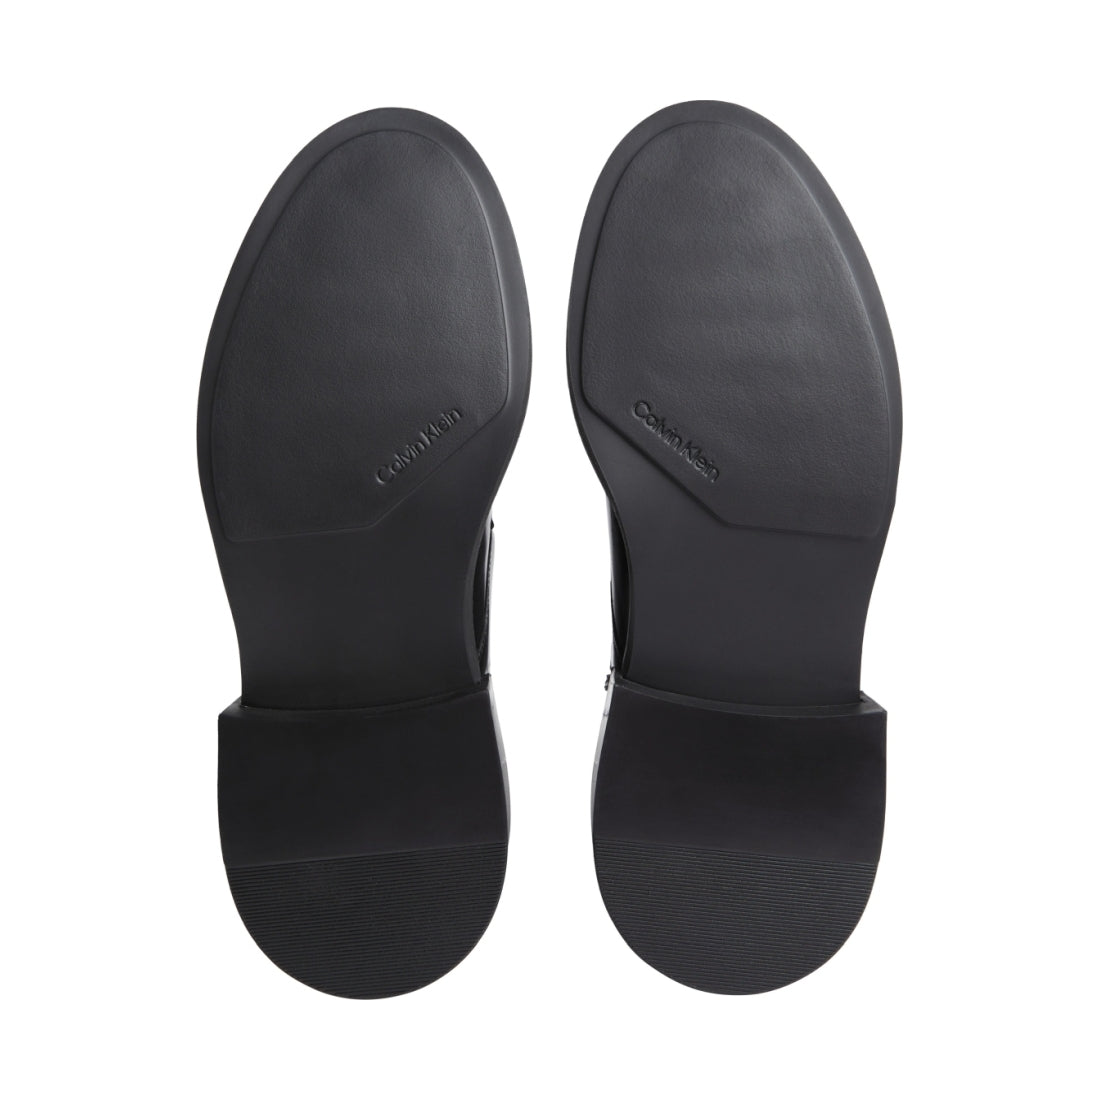 Calvin Klein mens black, magnet lace up boot | Vilbury London